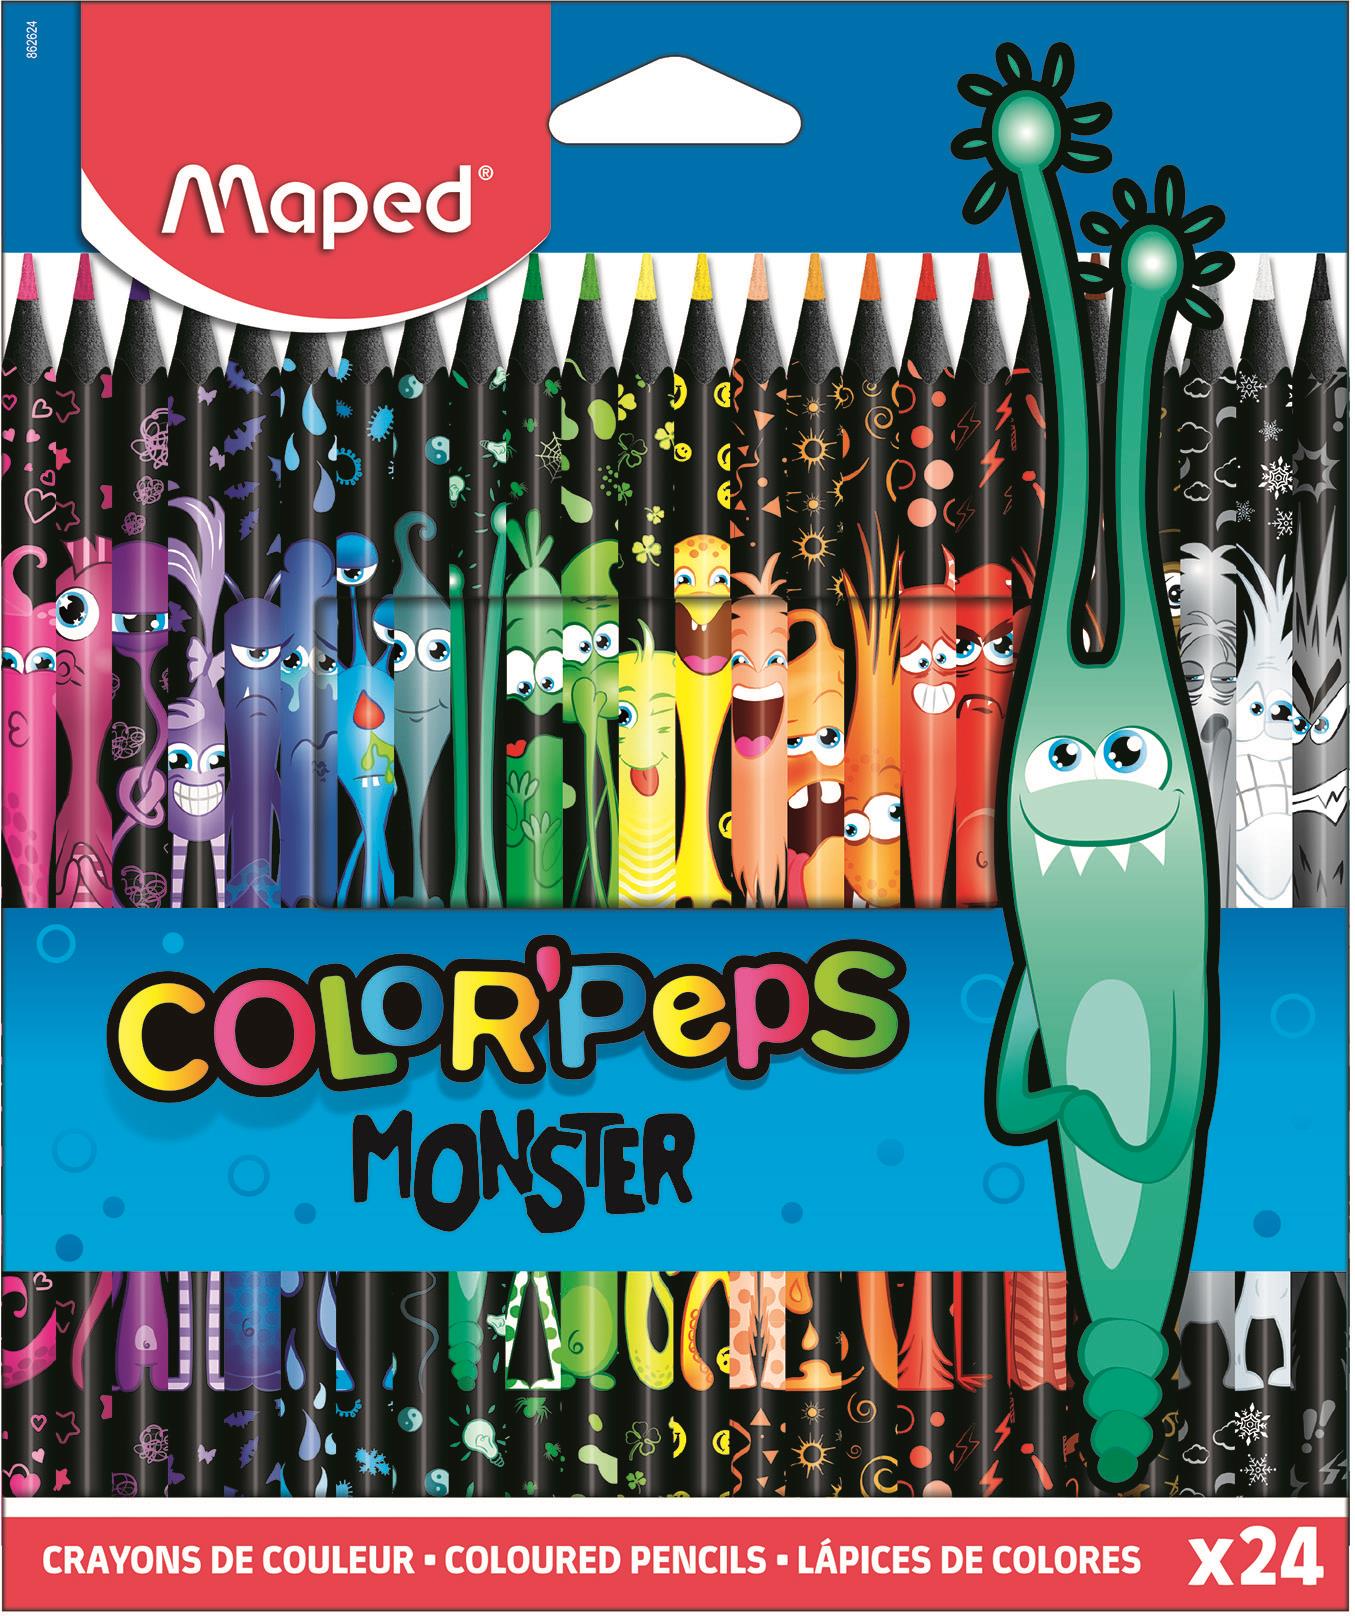 Maped Colour'Peps Monster Pencils x 24